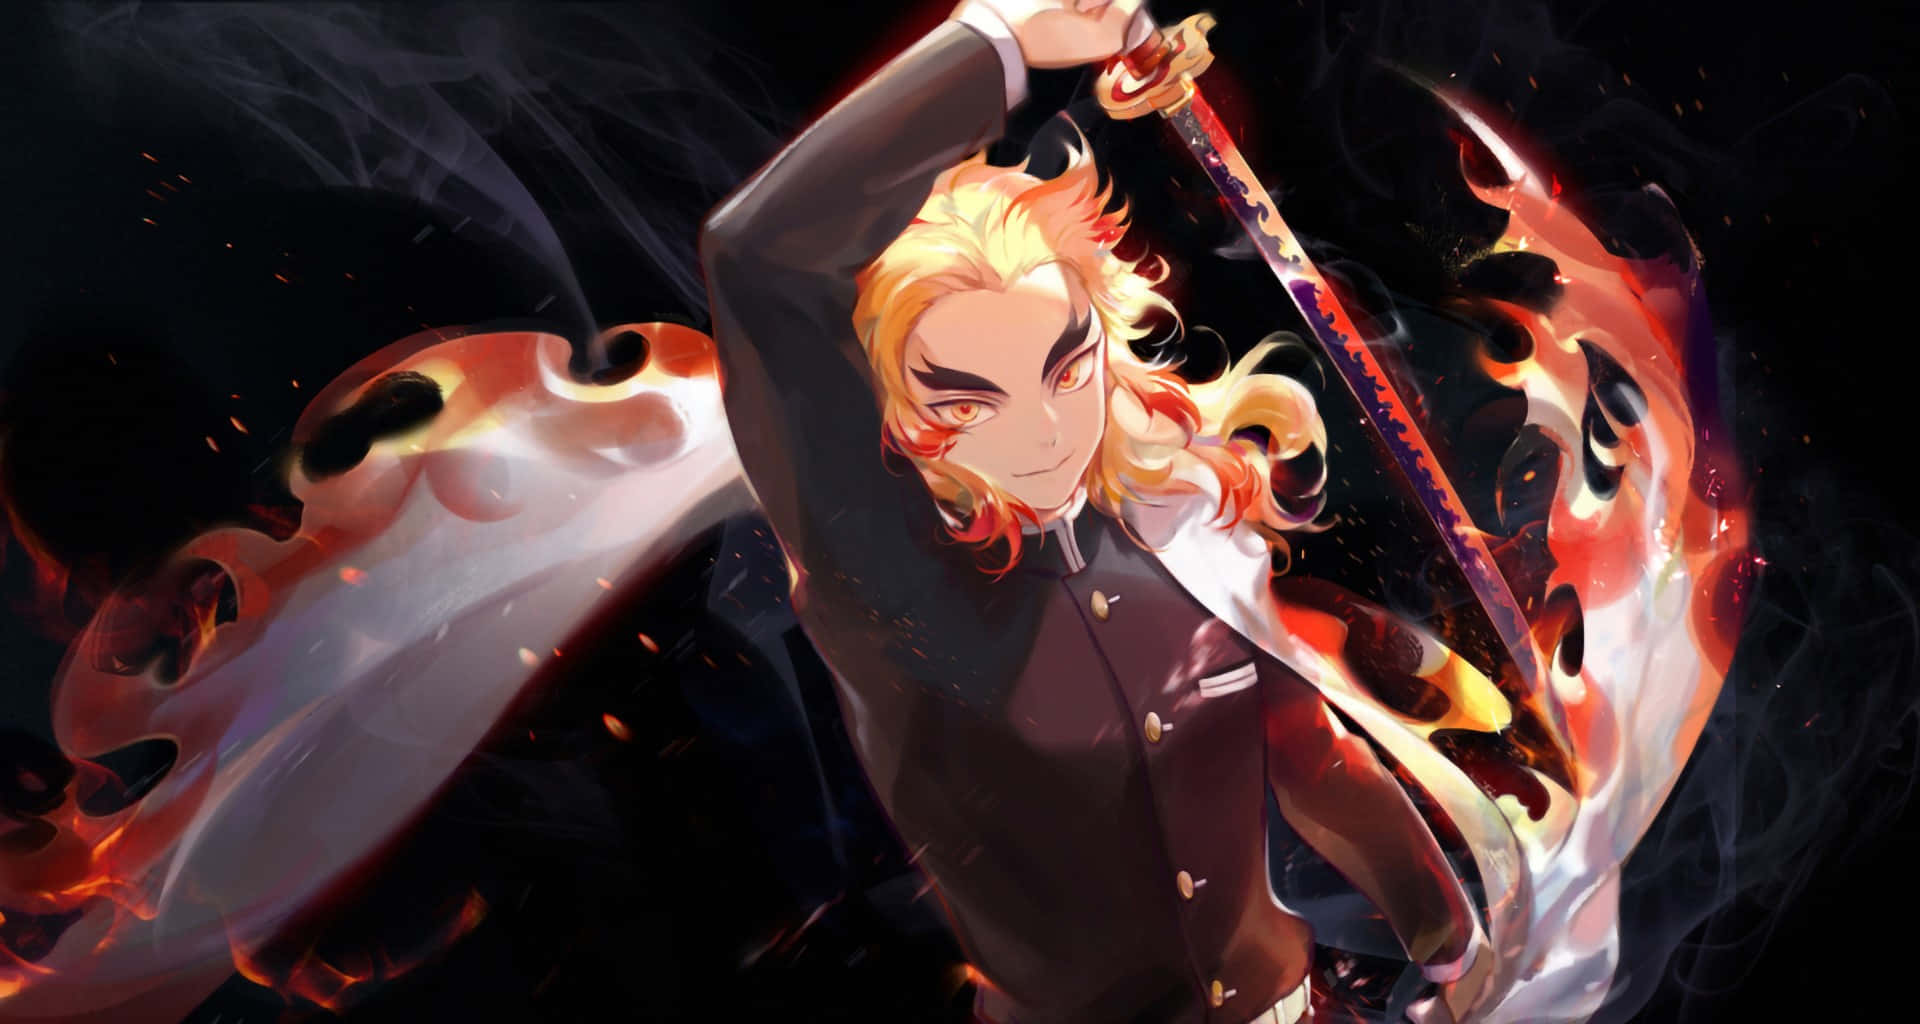 Rengoku wielding his flaming sword in a powerful stance Wallpaper